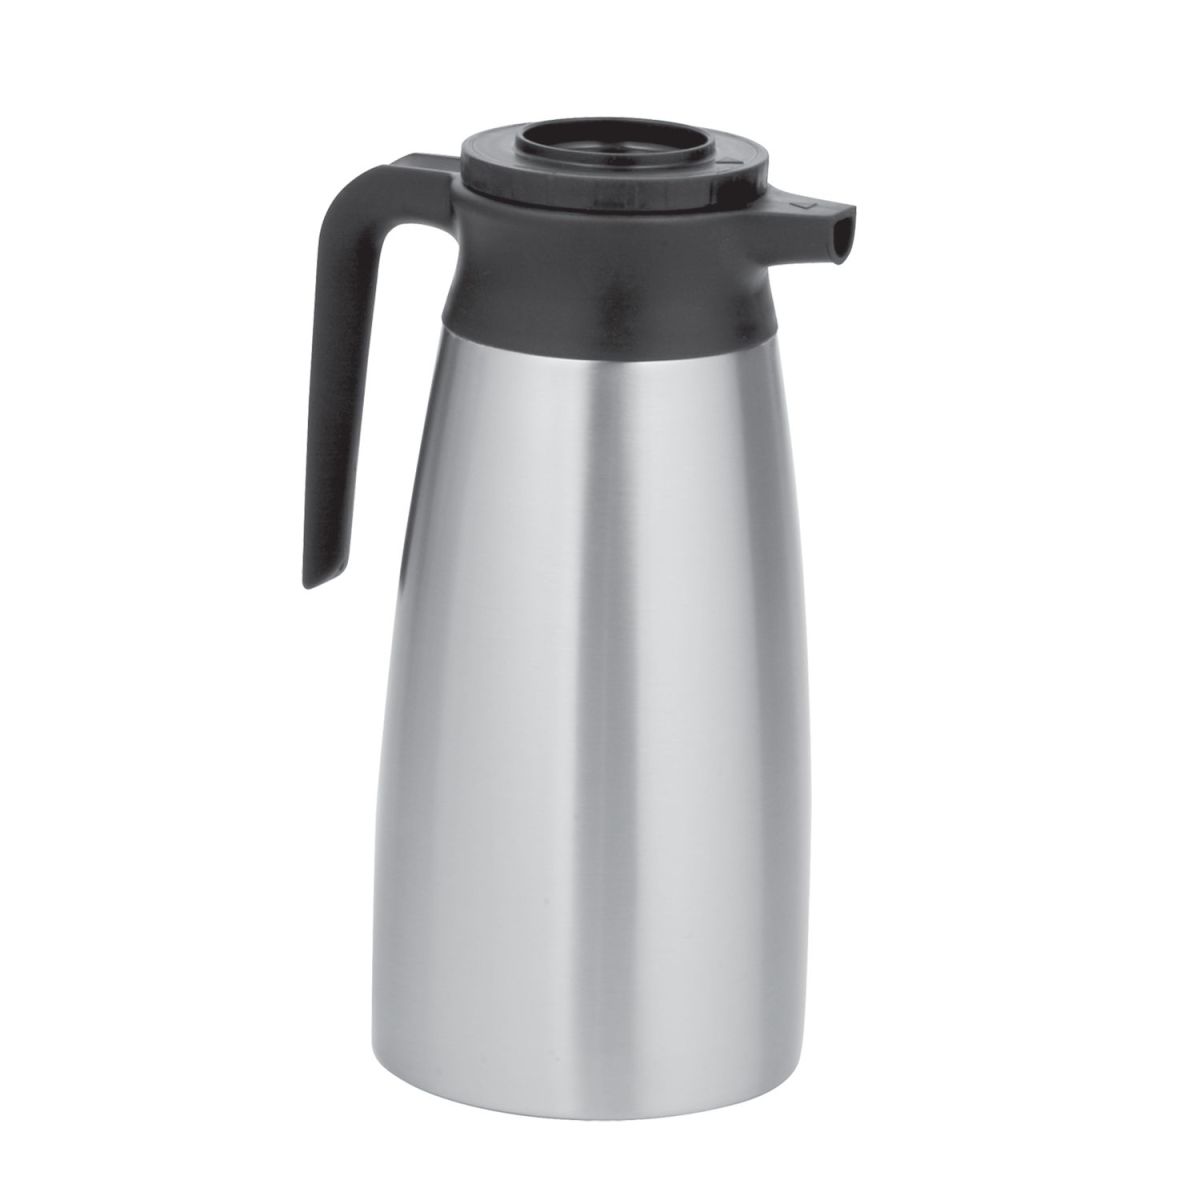 Bunn Thermal pitcher 1.9 liters